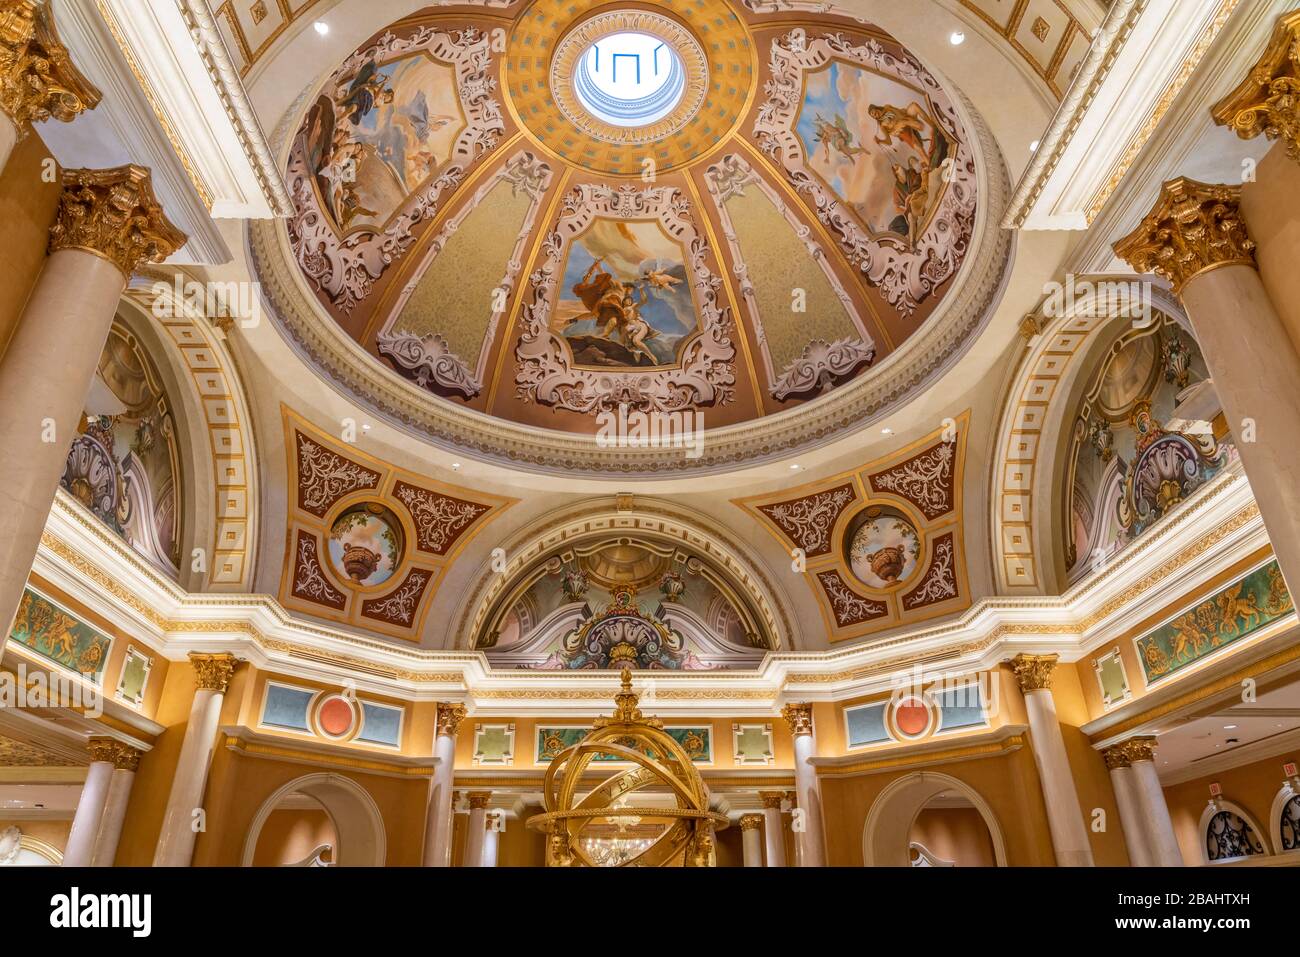 Interior decor at the Venetian casino and hotel complex along the Strip in Las Vegas, Nevada, USA. Stock Photo